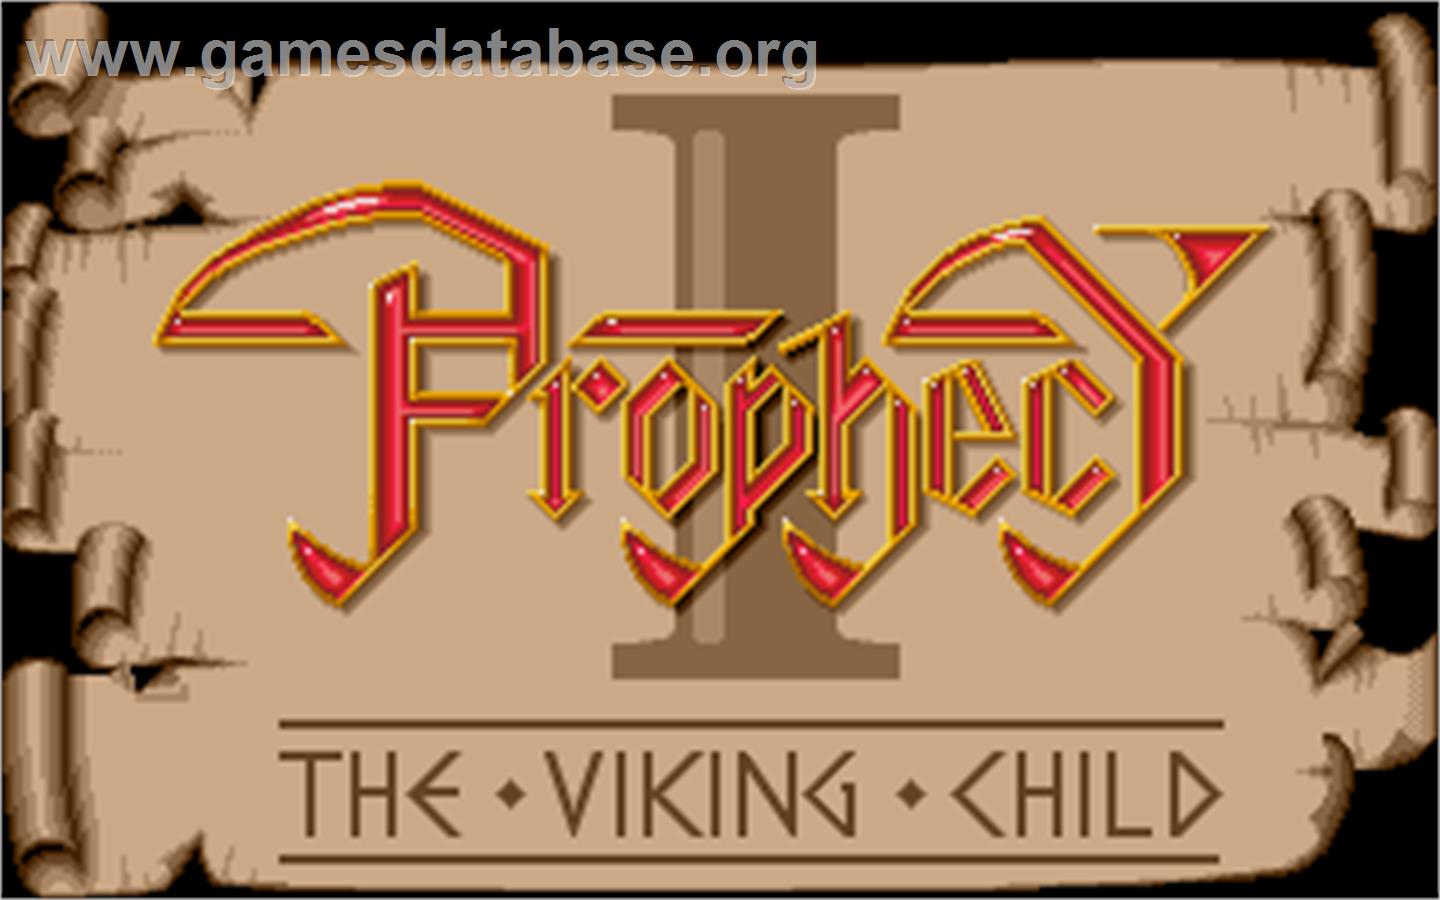 Prophecy 1: The Viking Child - Atari ST - Artwork - Title Screen